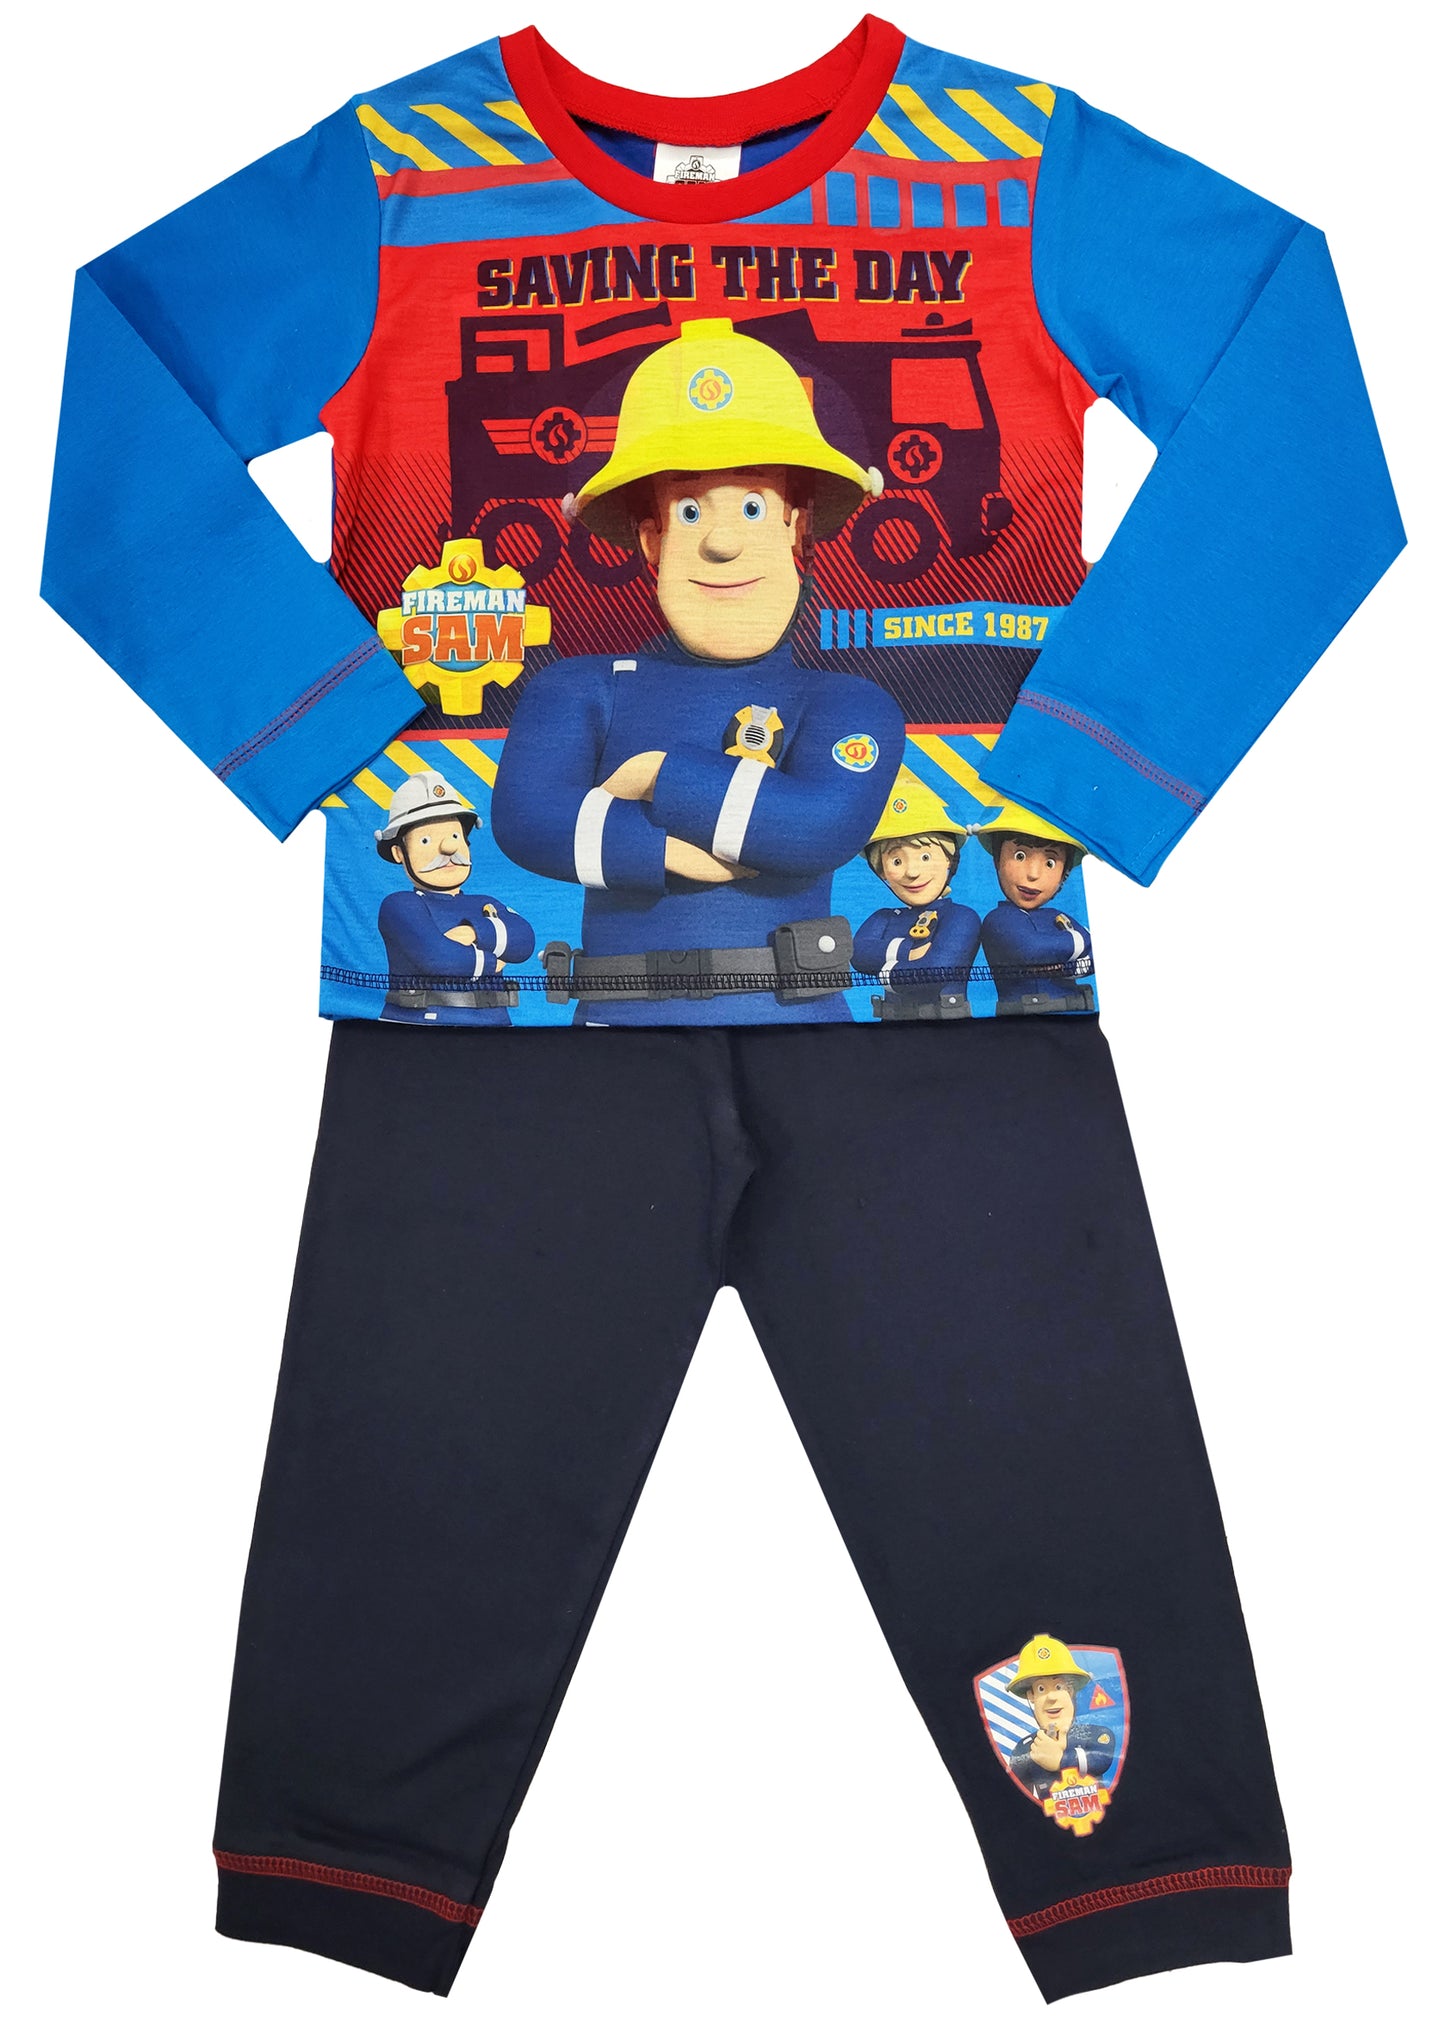 Boys Fireman Sam Pyjamas - Saving the Day